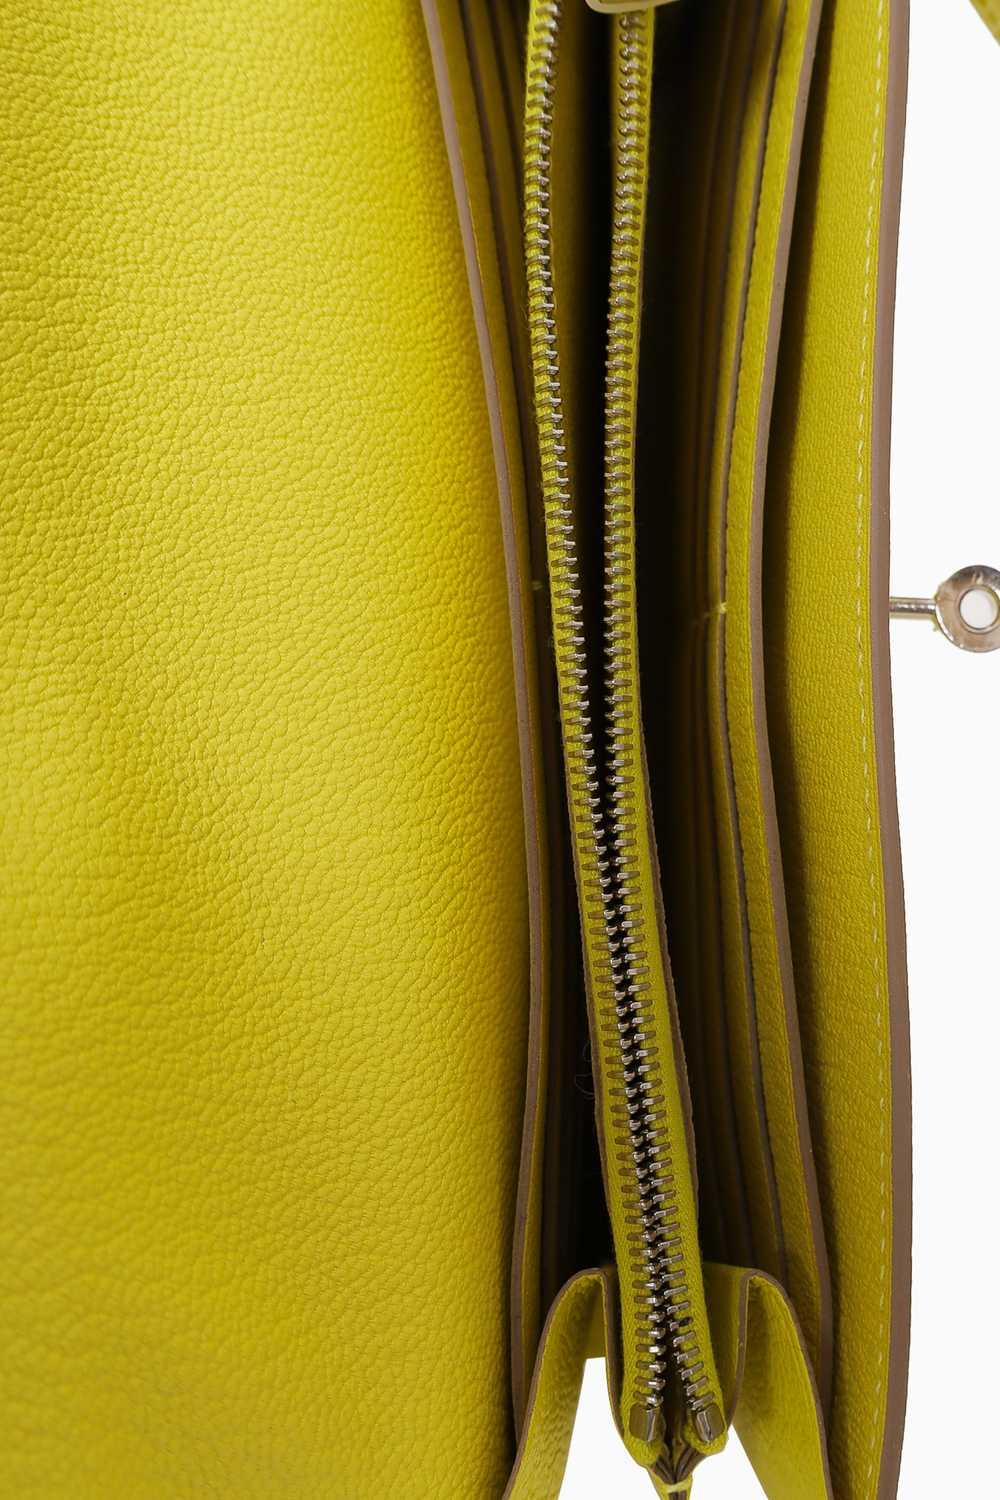 Hermès 2017 Yellow Chevre Leather Kelly Wallet - image 6